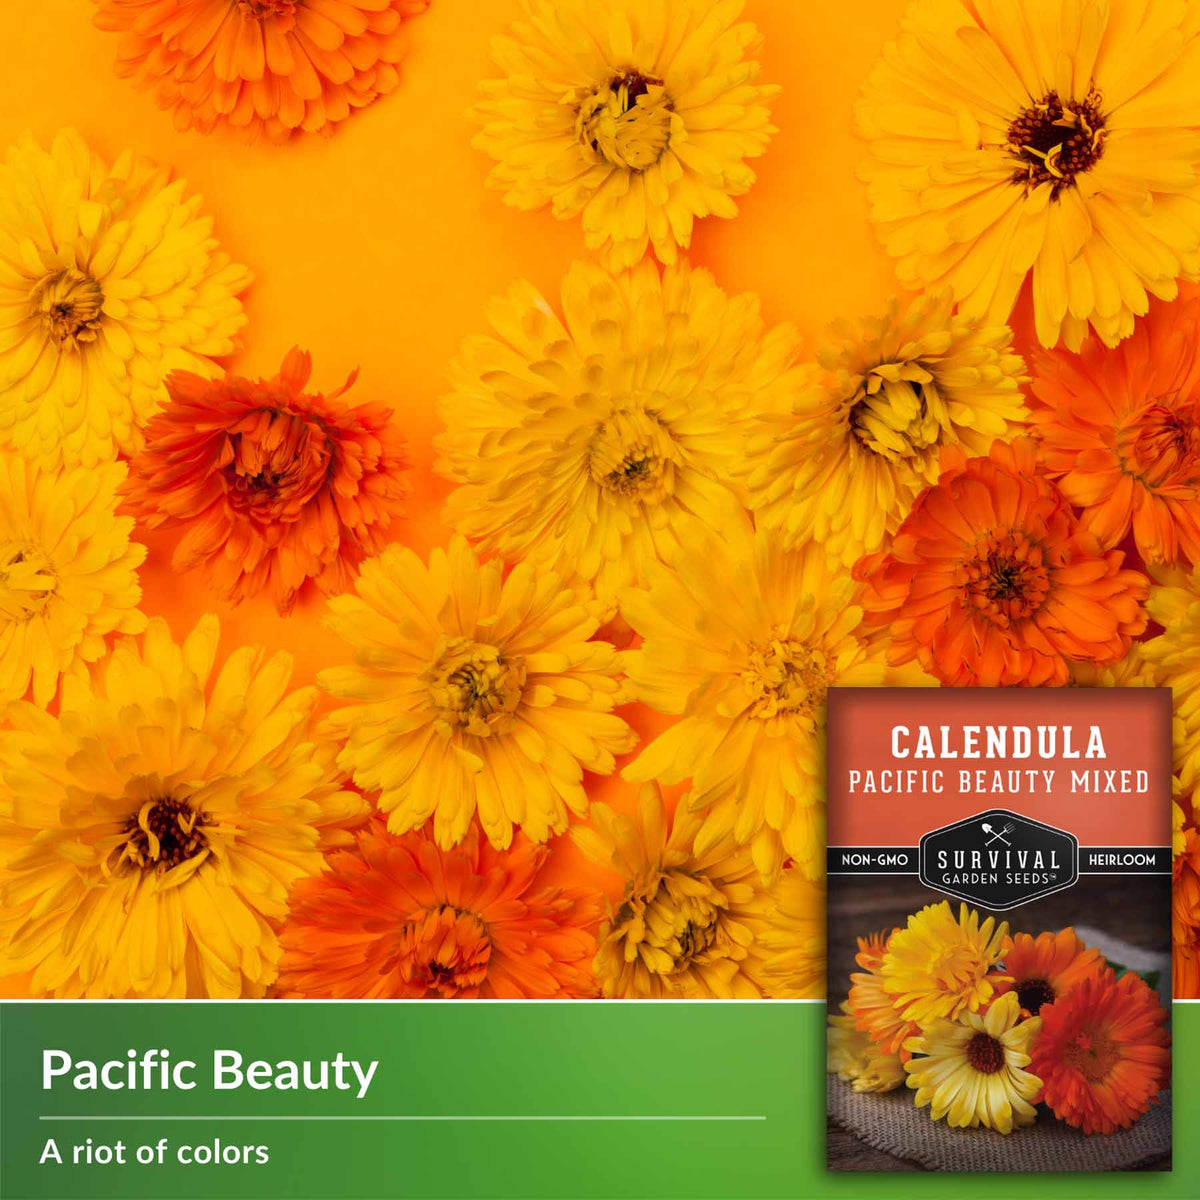 Pacific Beauty calendula